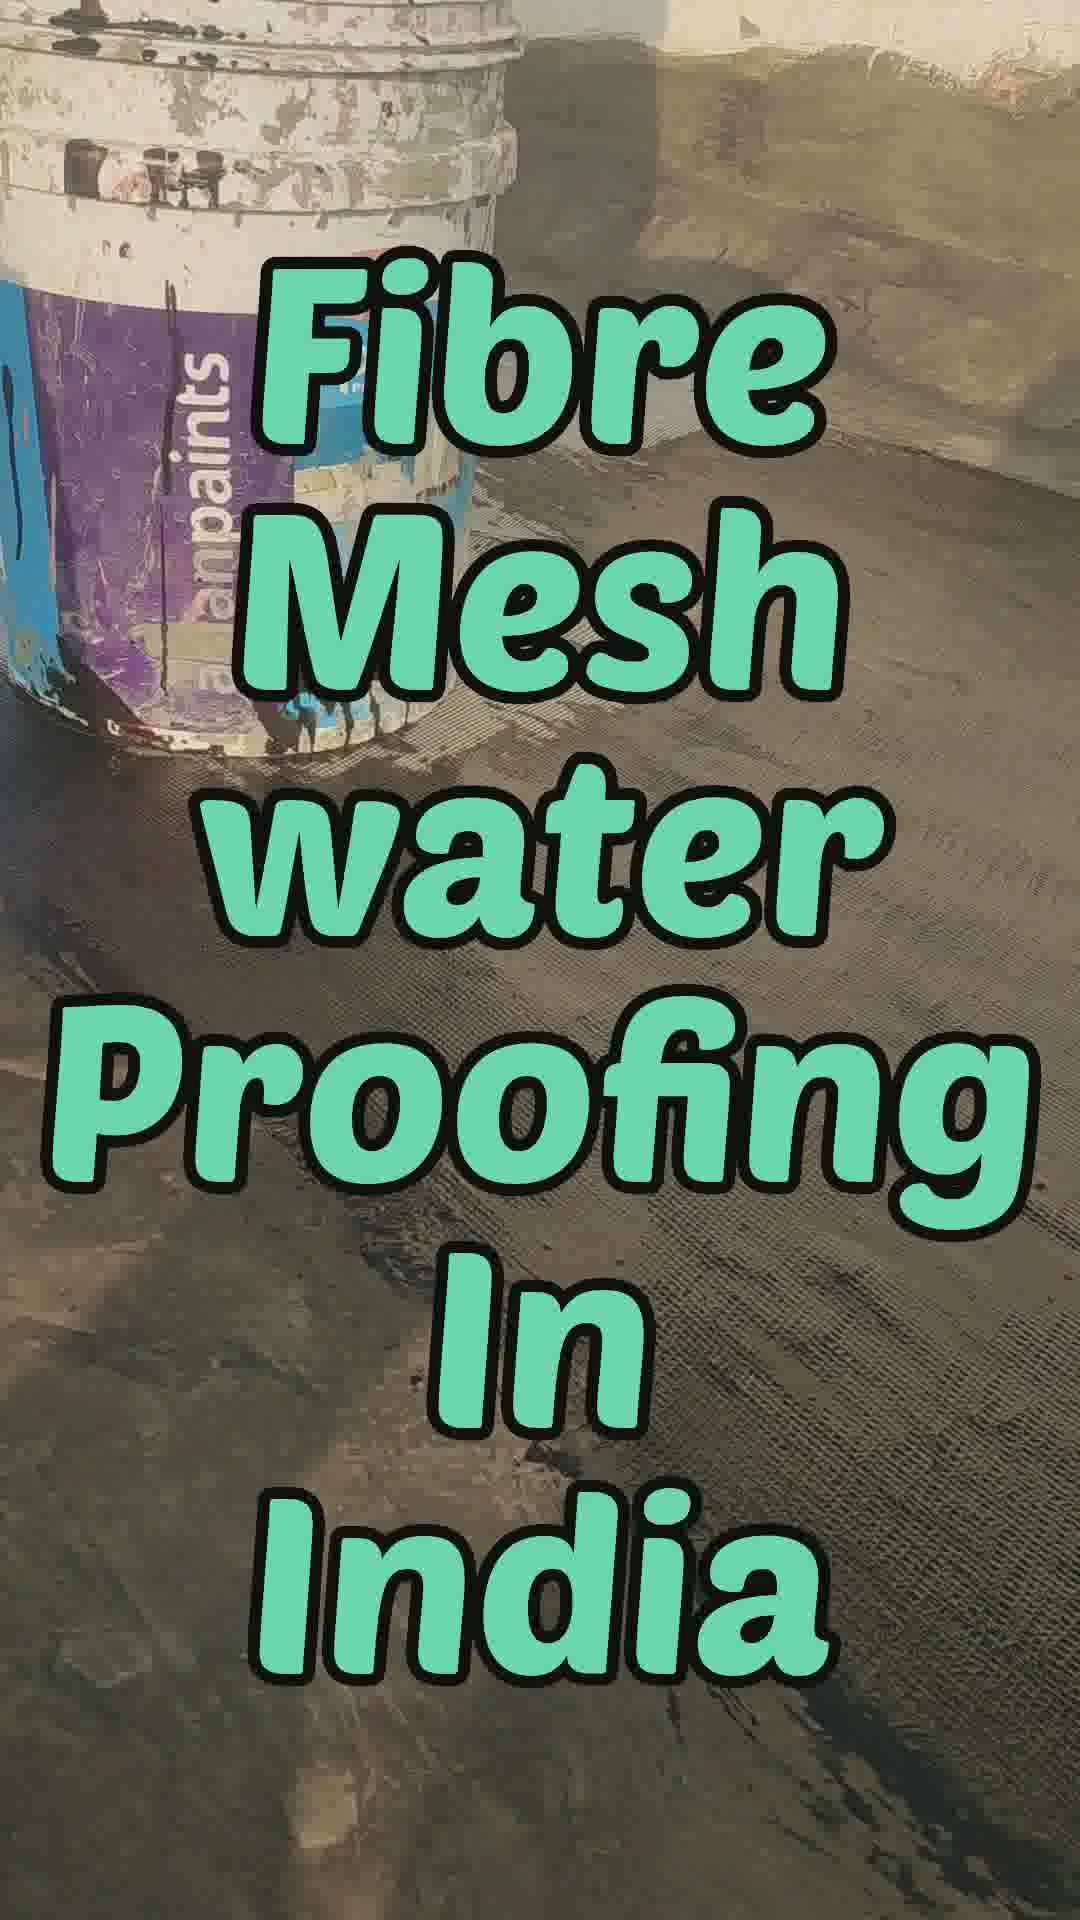 Fibre mesh waterproofing in india
 #WaterProofing